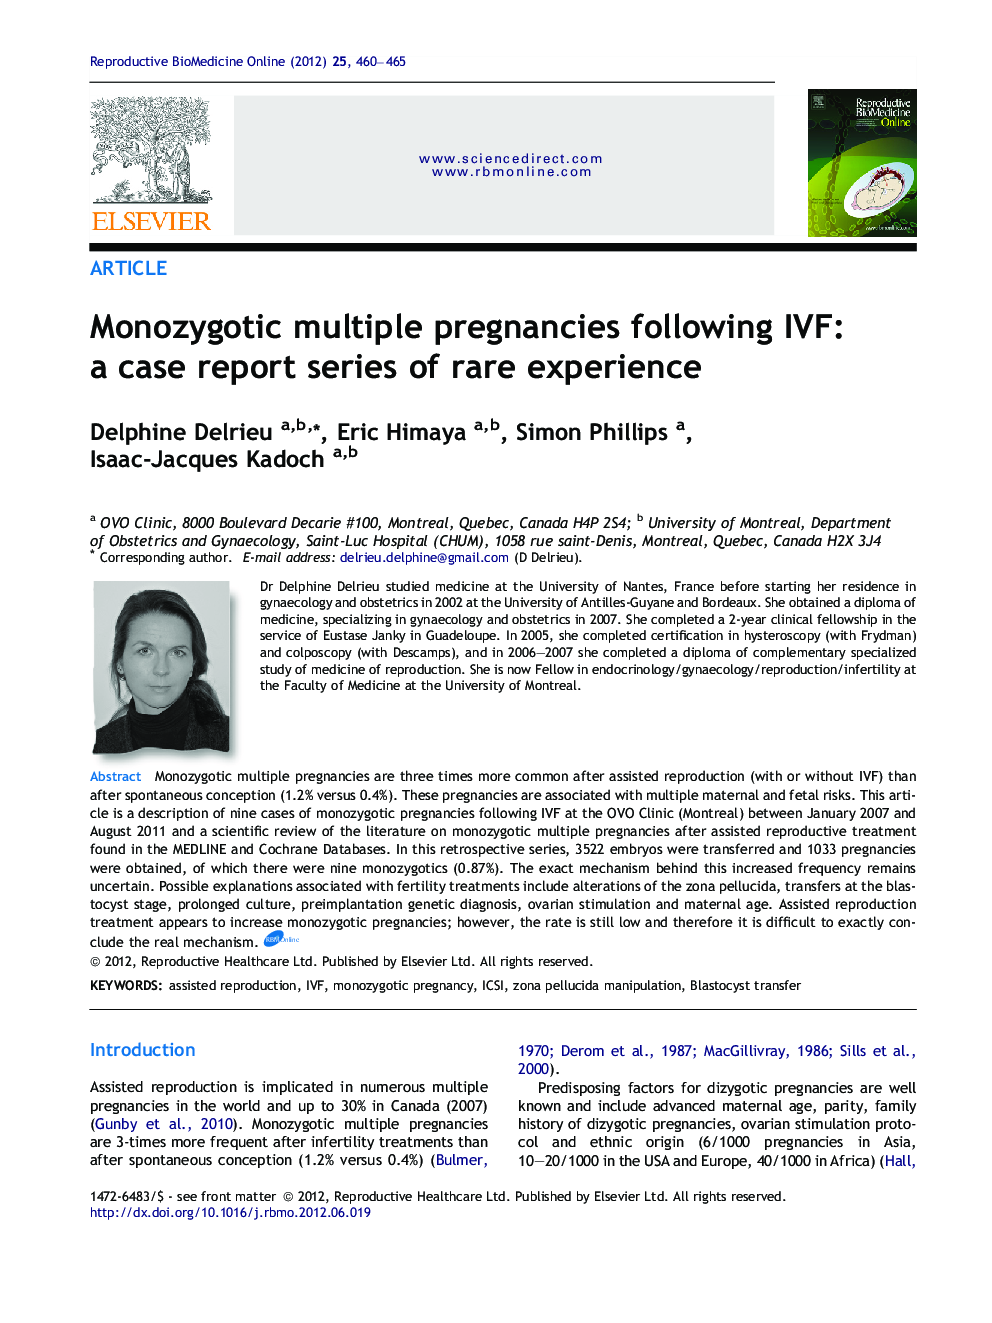 Monozygotic multiple pregnancies following IVF: a case report series of rare experience 